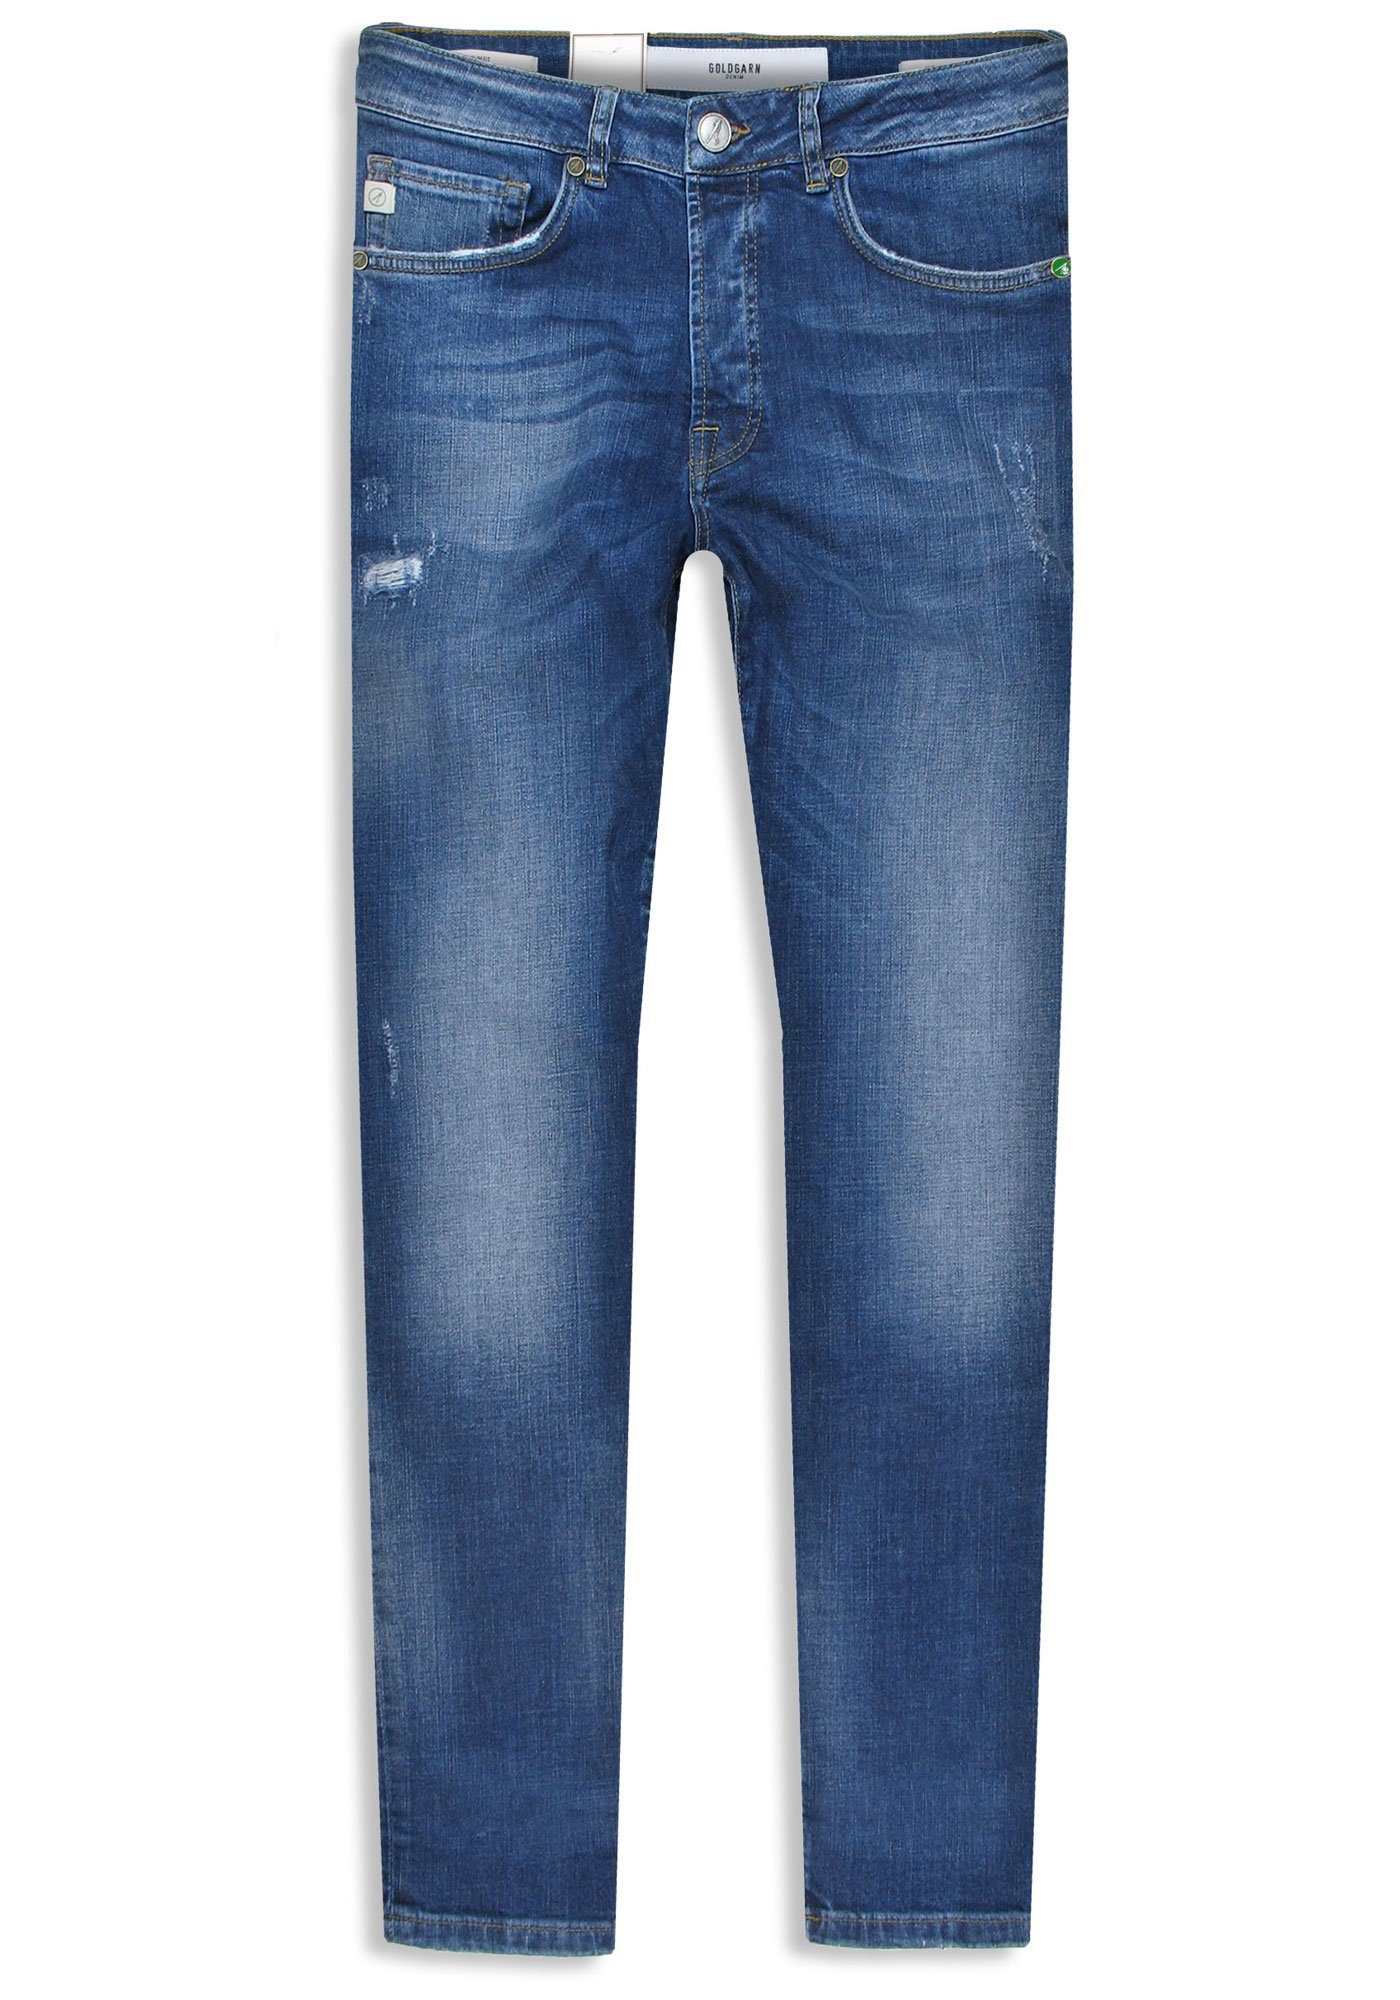 Goldgarn 5-Pocket-Jeans Herren U2 Slim Fit distressed Denim 1090 Midblue